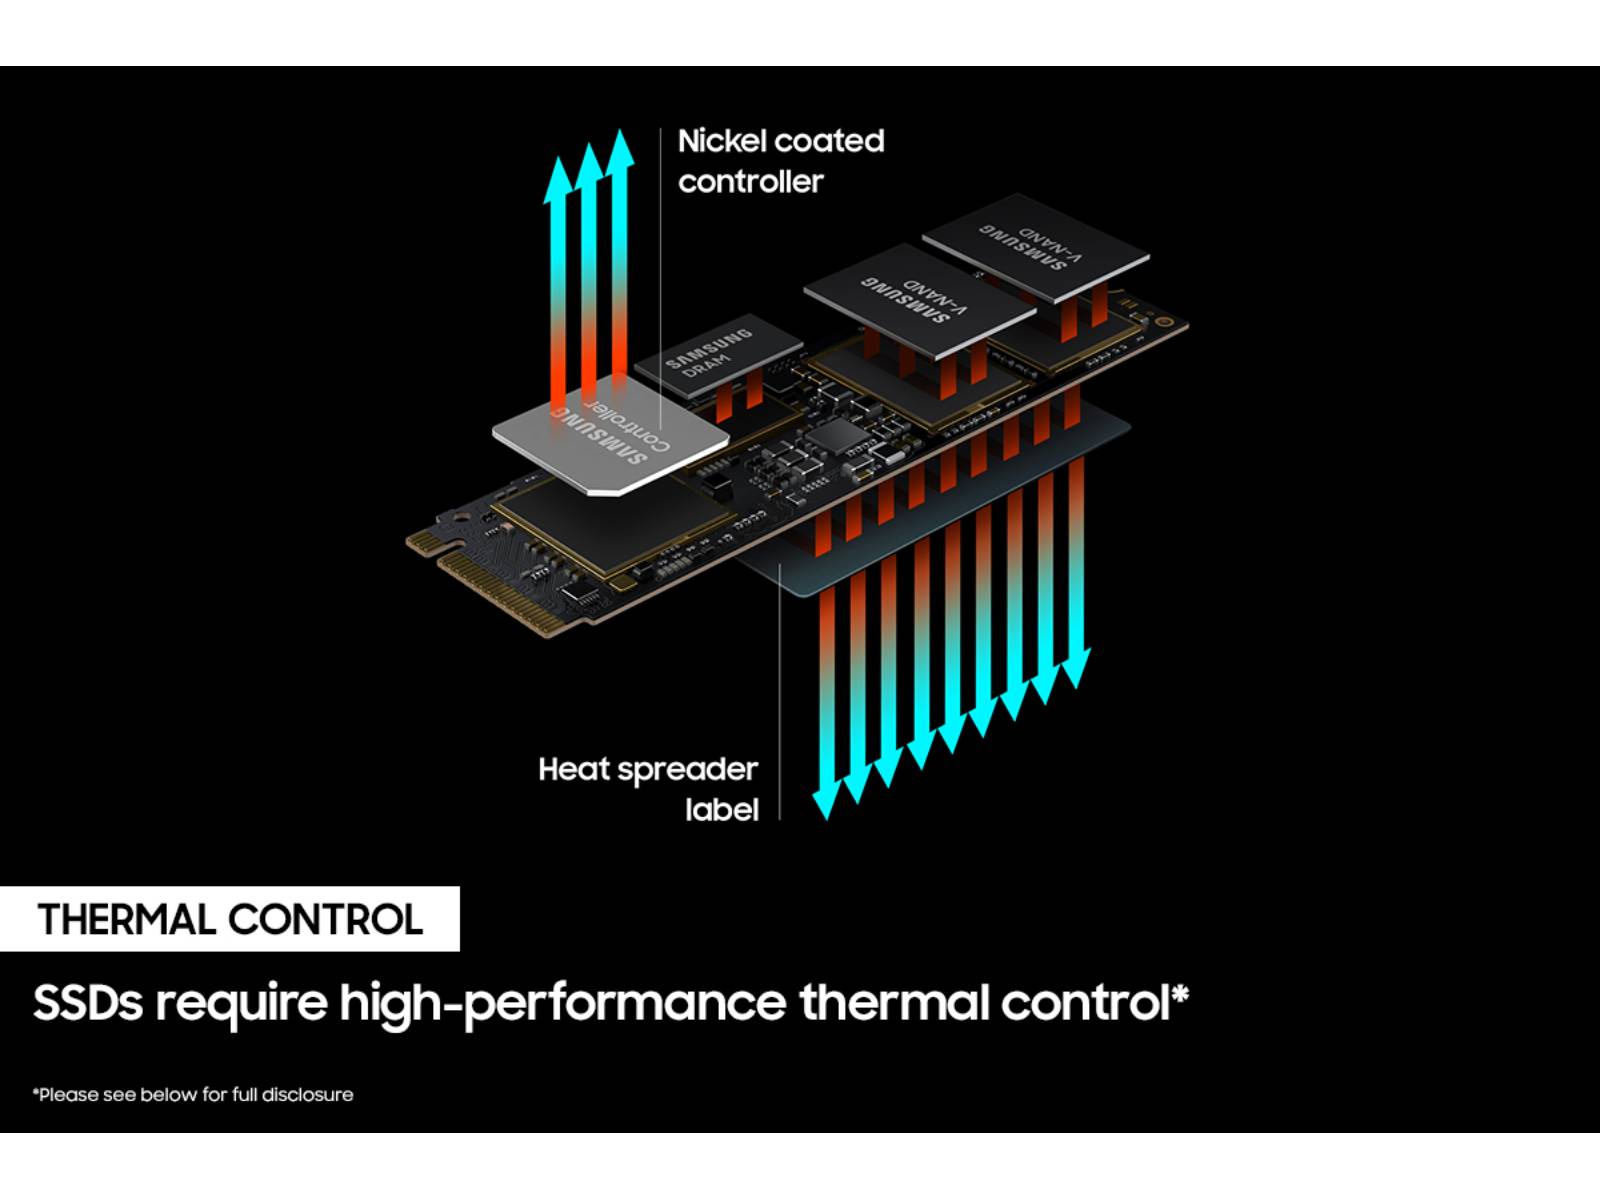 980 PRO w/ Heatsink PCIe® 4.0 NVMe™ SSD 2TB Memory & Storage - MZ 